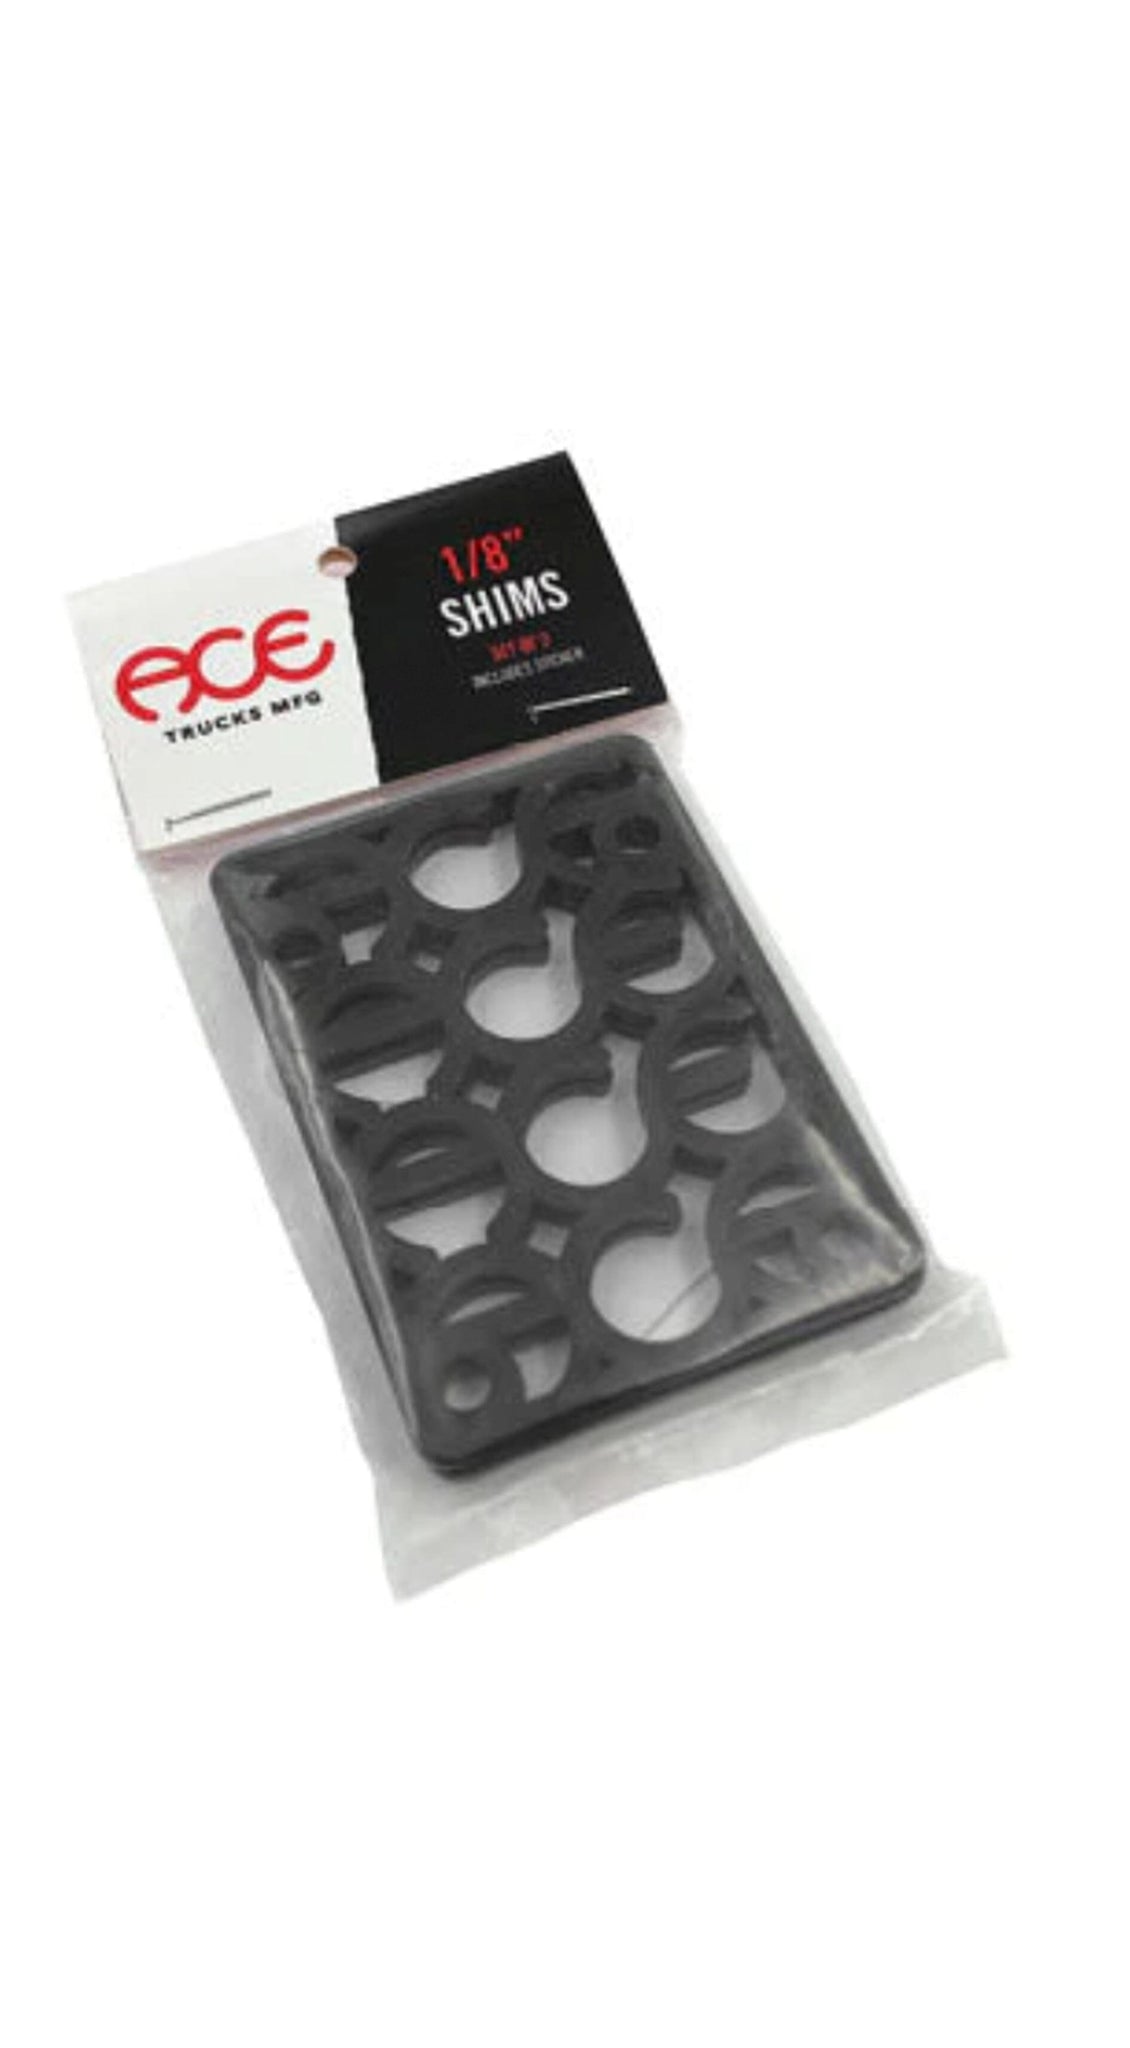 Ace Trucks Shims 1/8" (Riser Pads)-Accesorios Accesorios ACE Trucks 